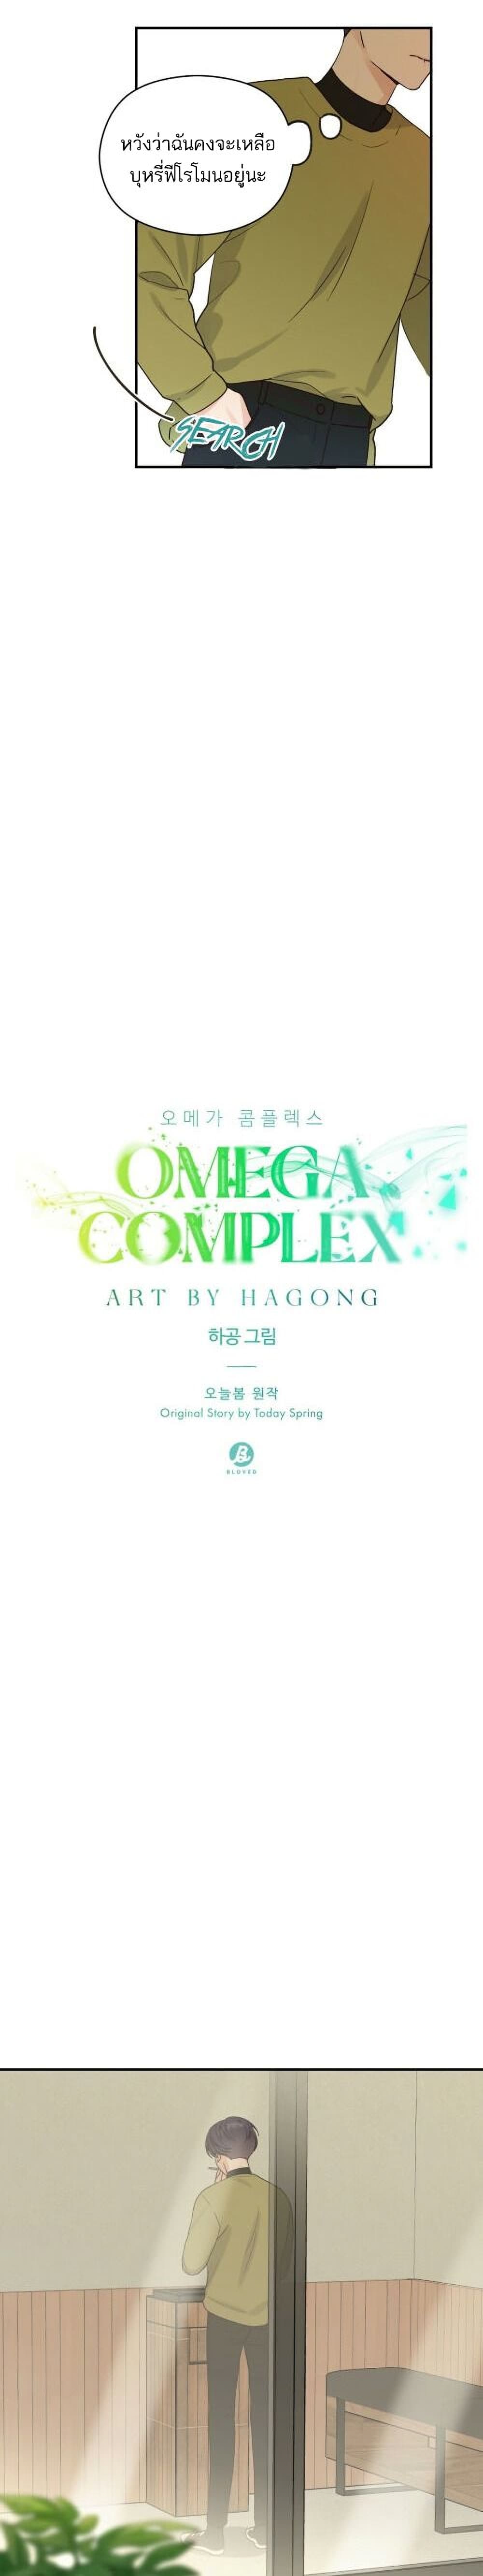 Omega Complex 10 03